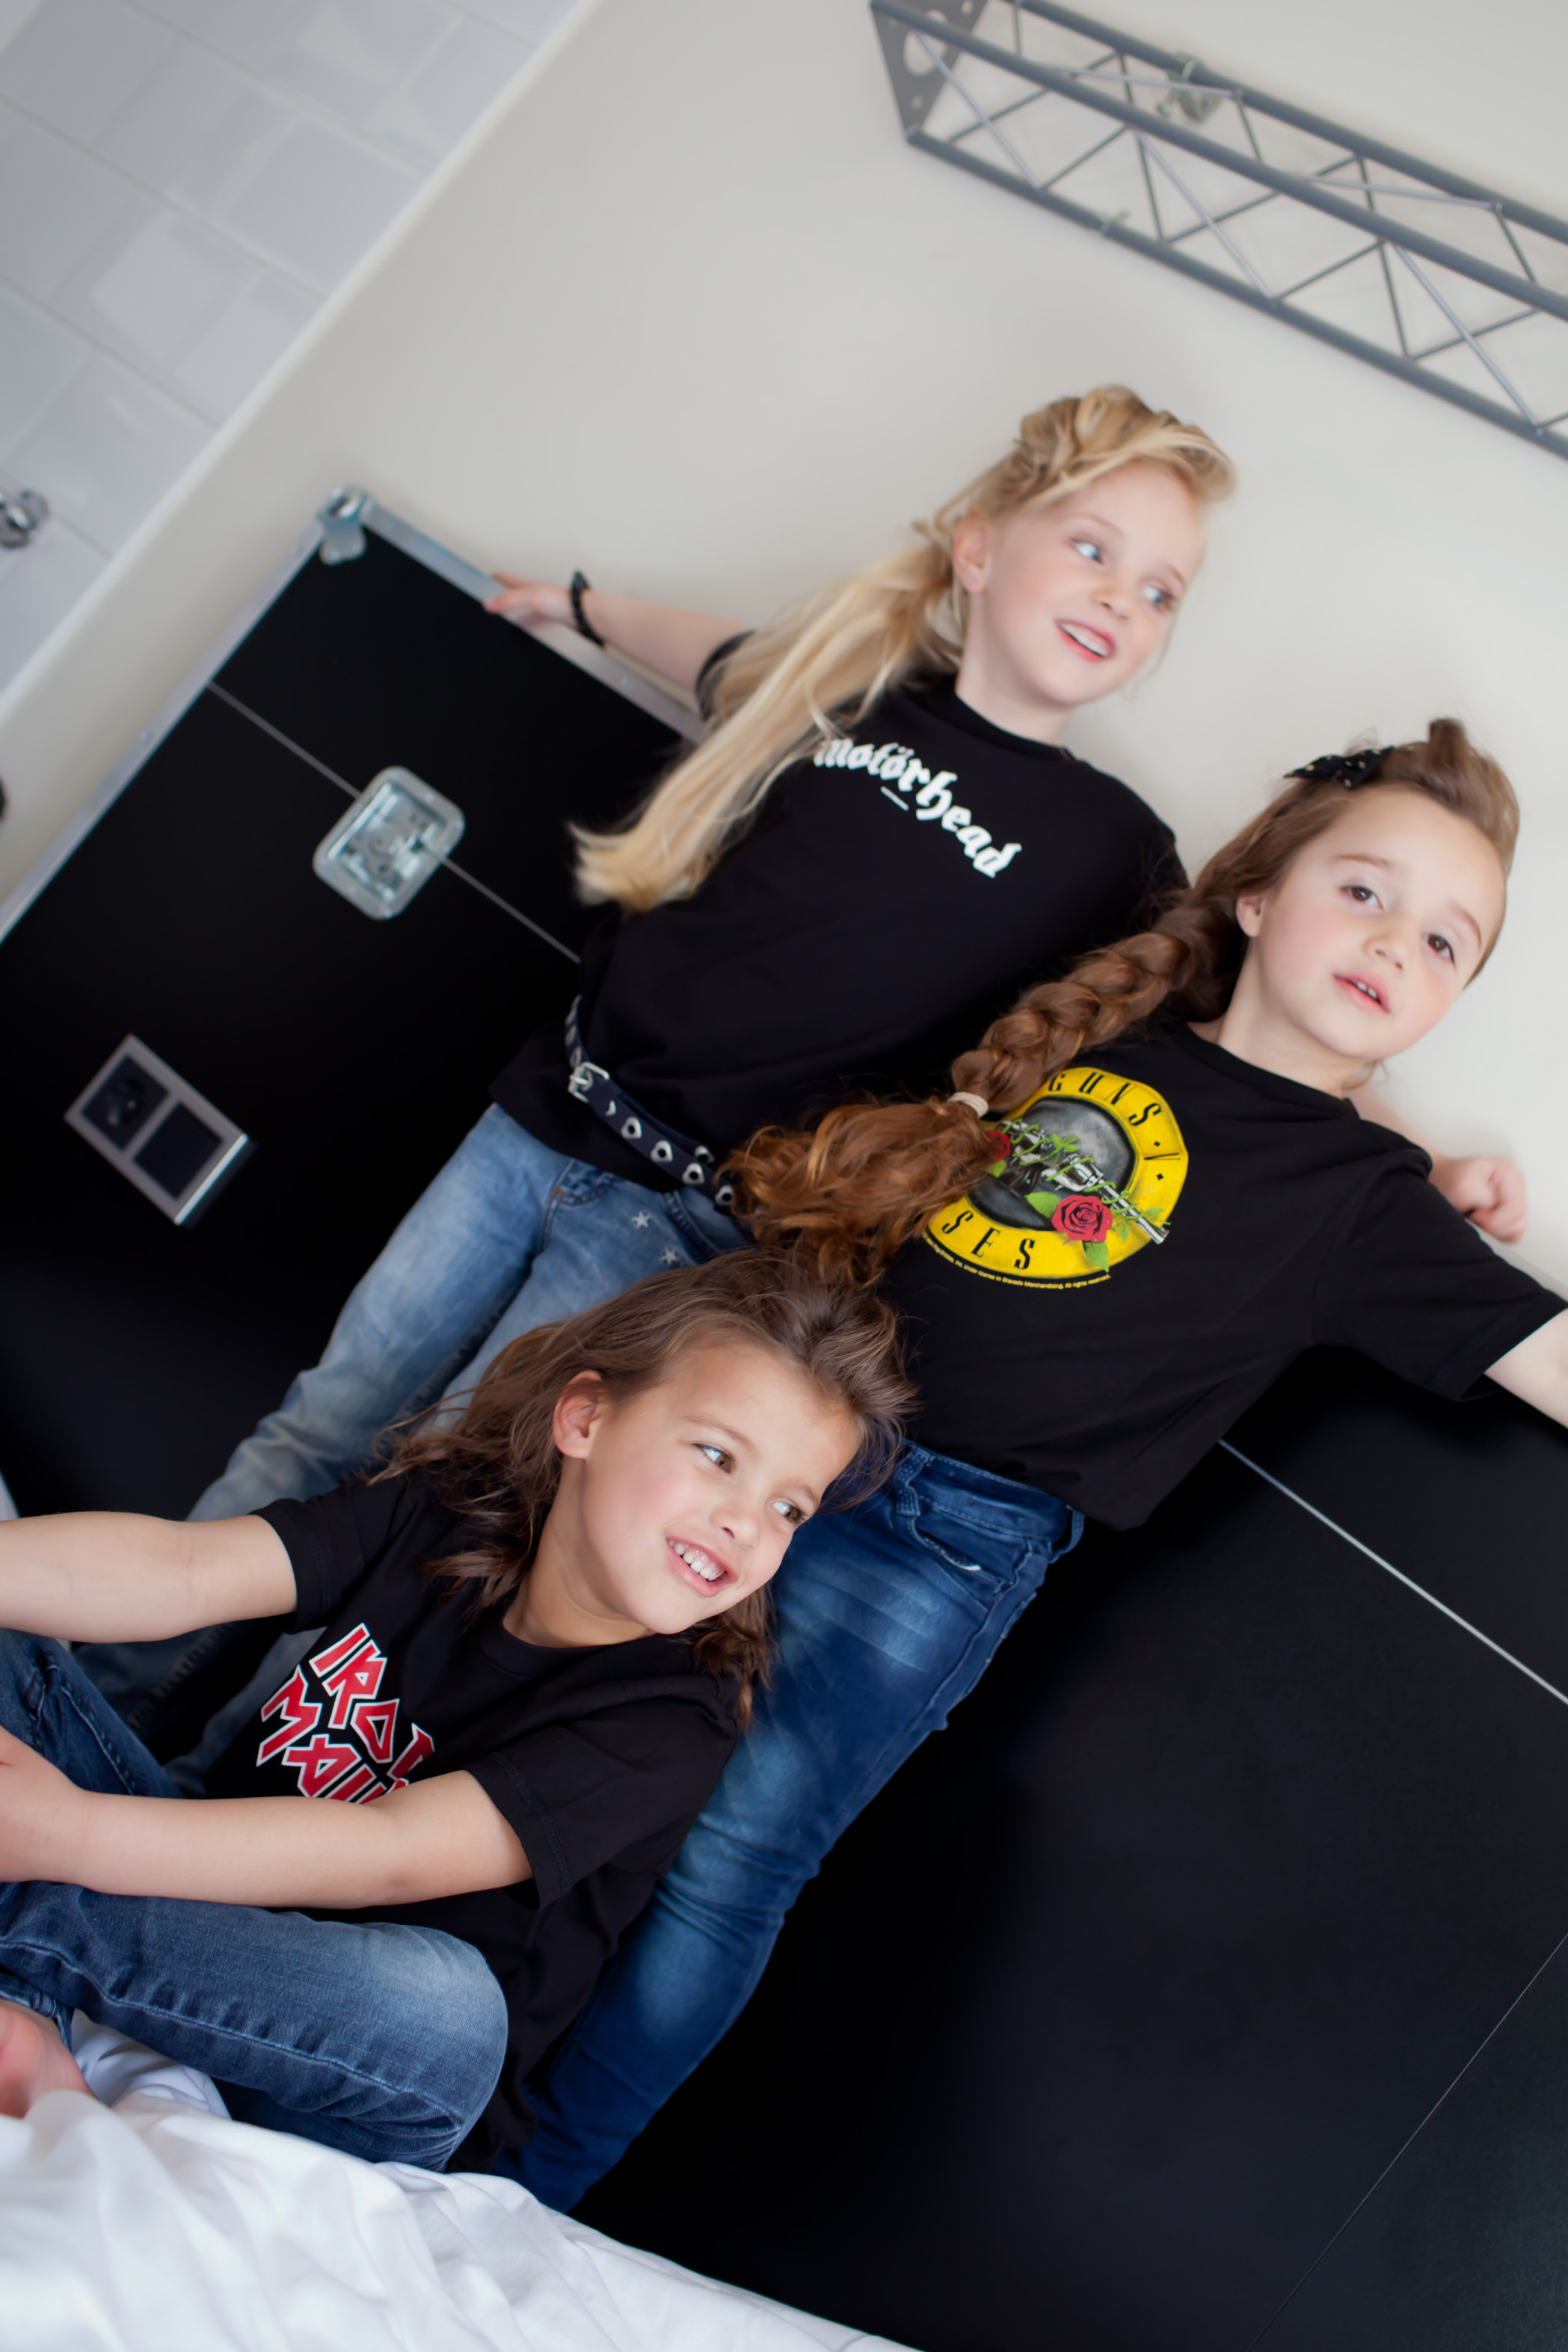 Iron Maiden kinder t-shirt group 3 girls